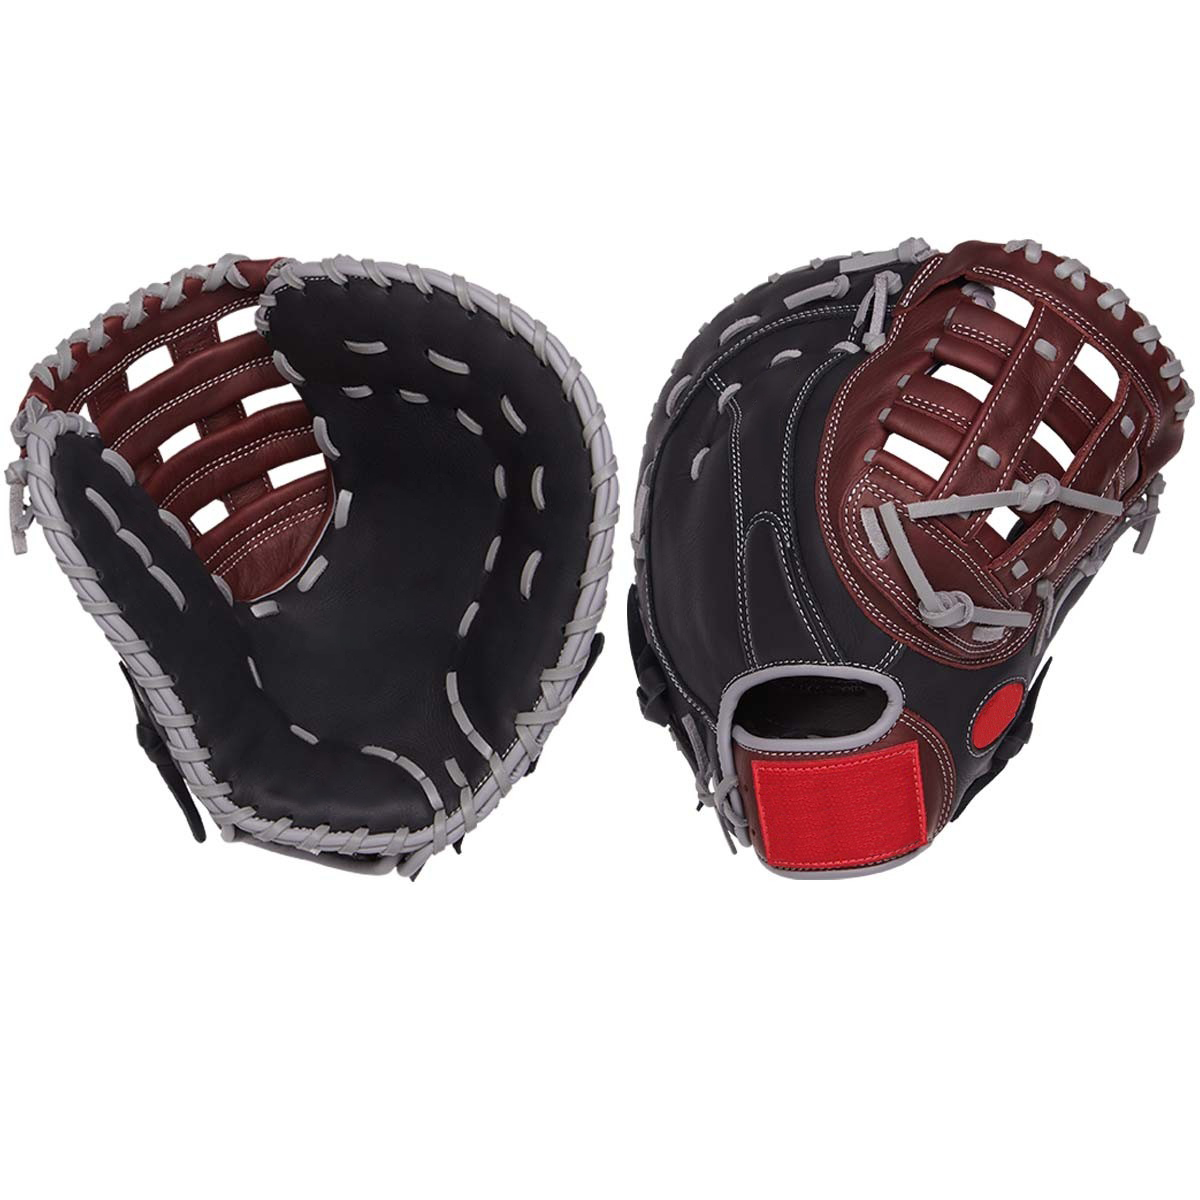 12.5" Full leather soft antiwear right hand throw baseball gloves